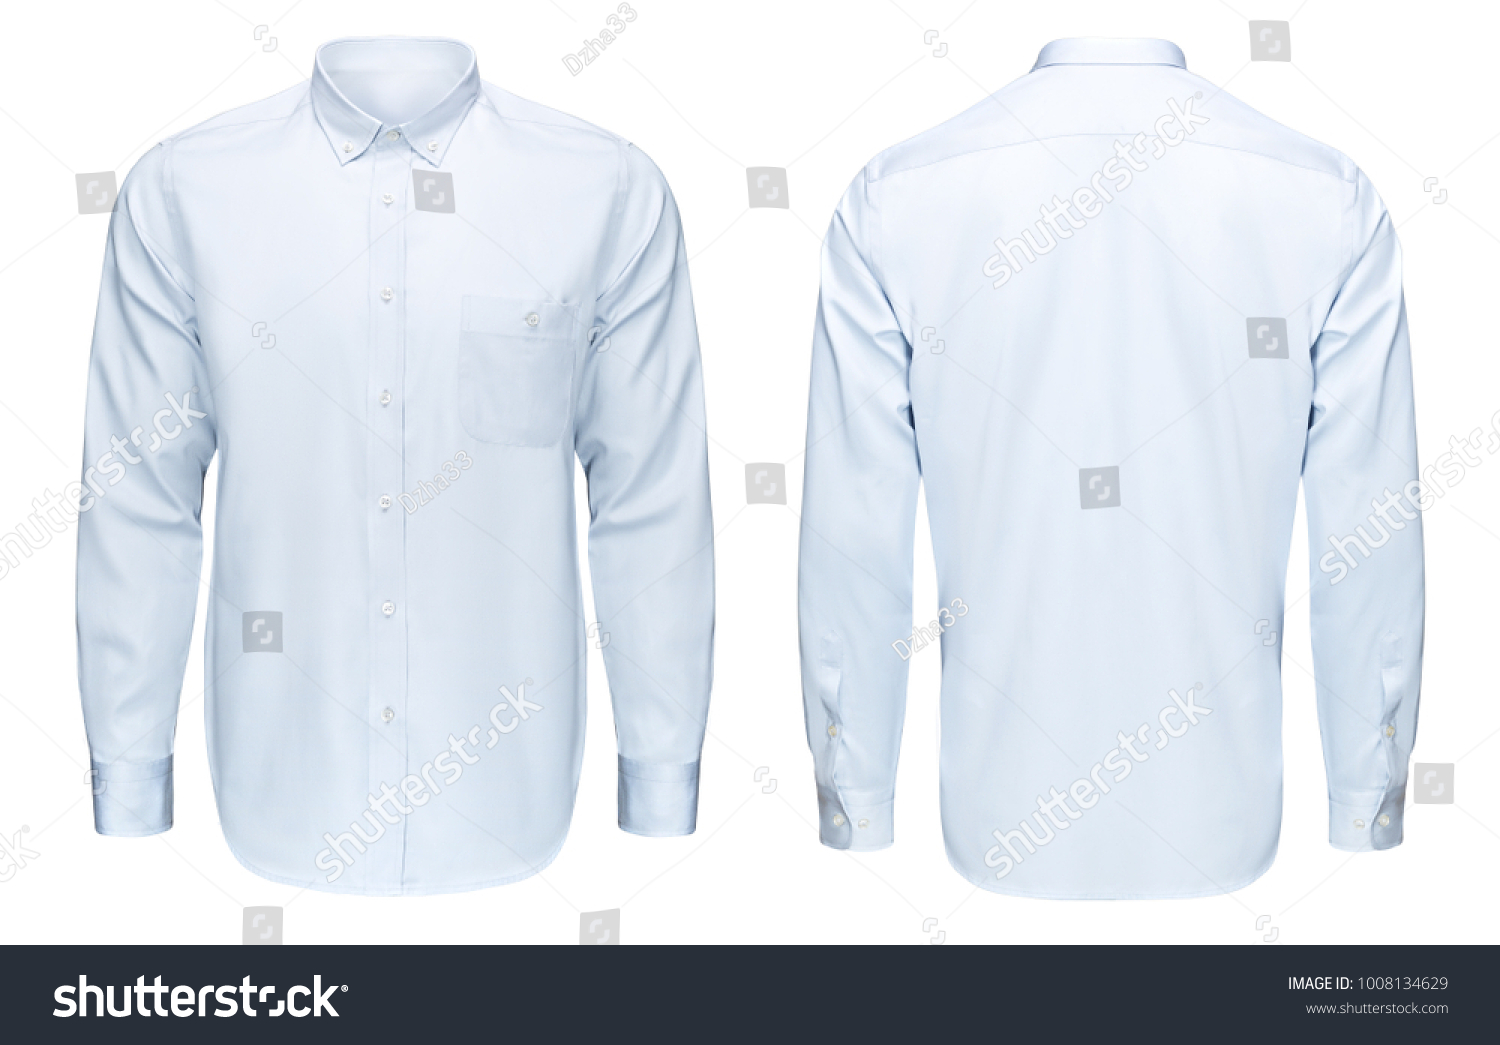 15,402 White business shirt mockup Images, Stock Photos & Vectors ...